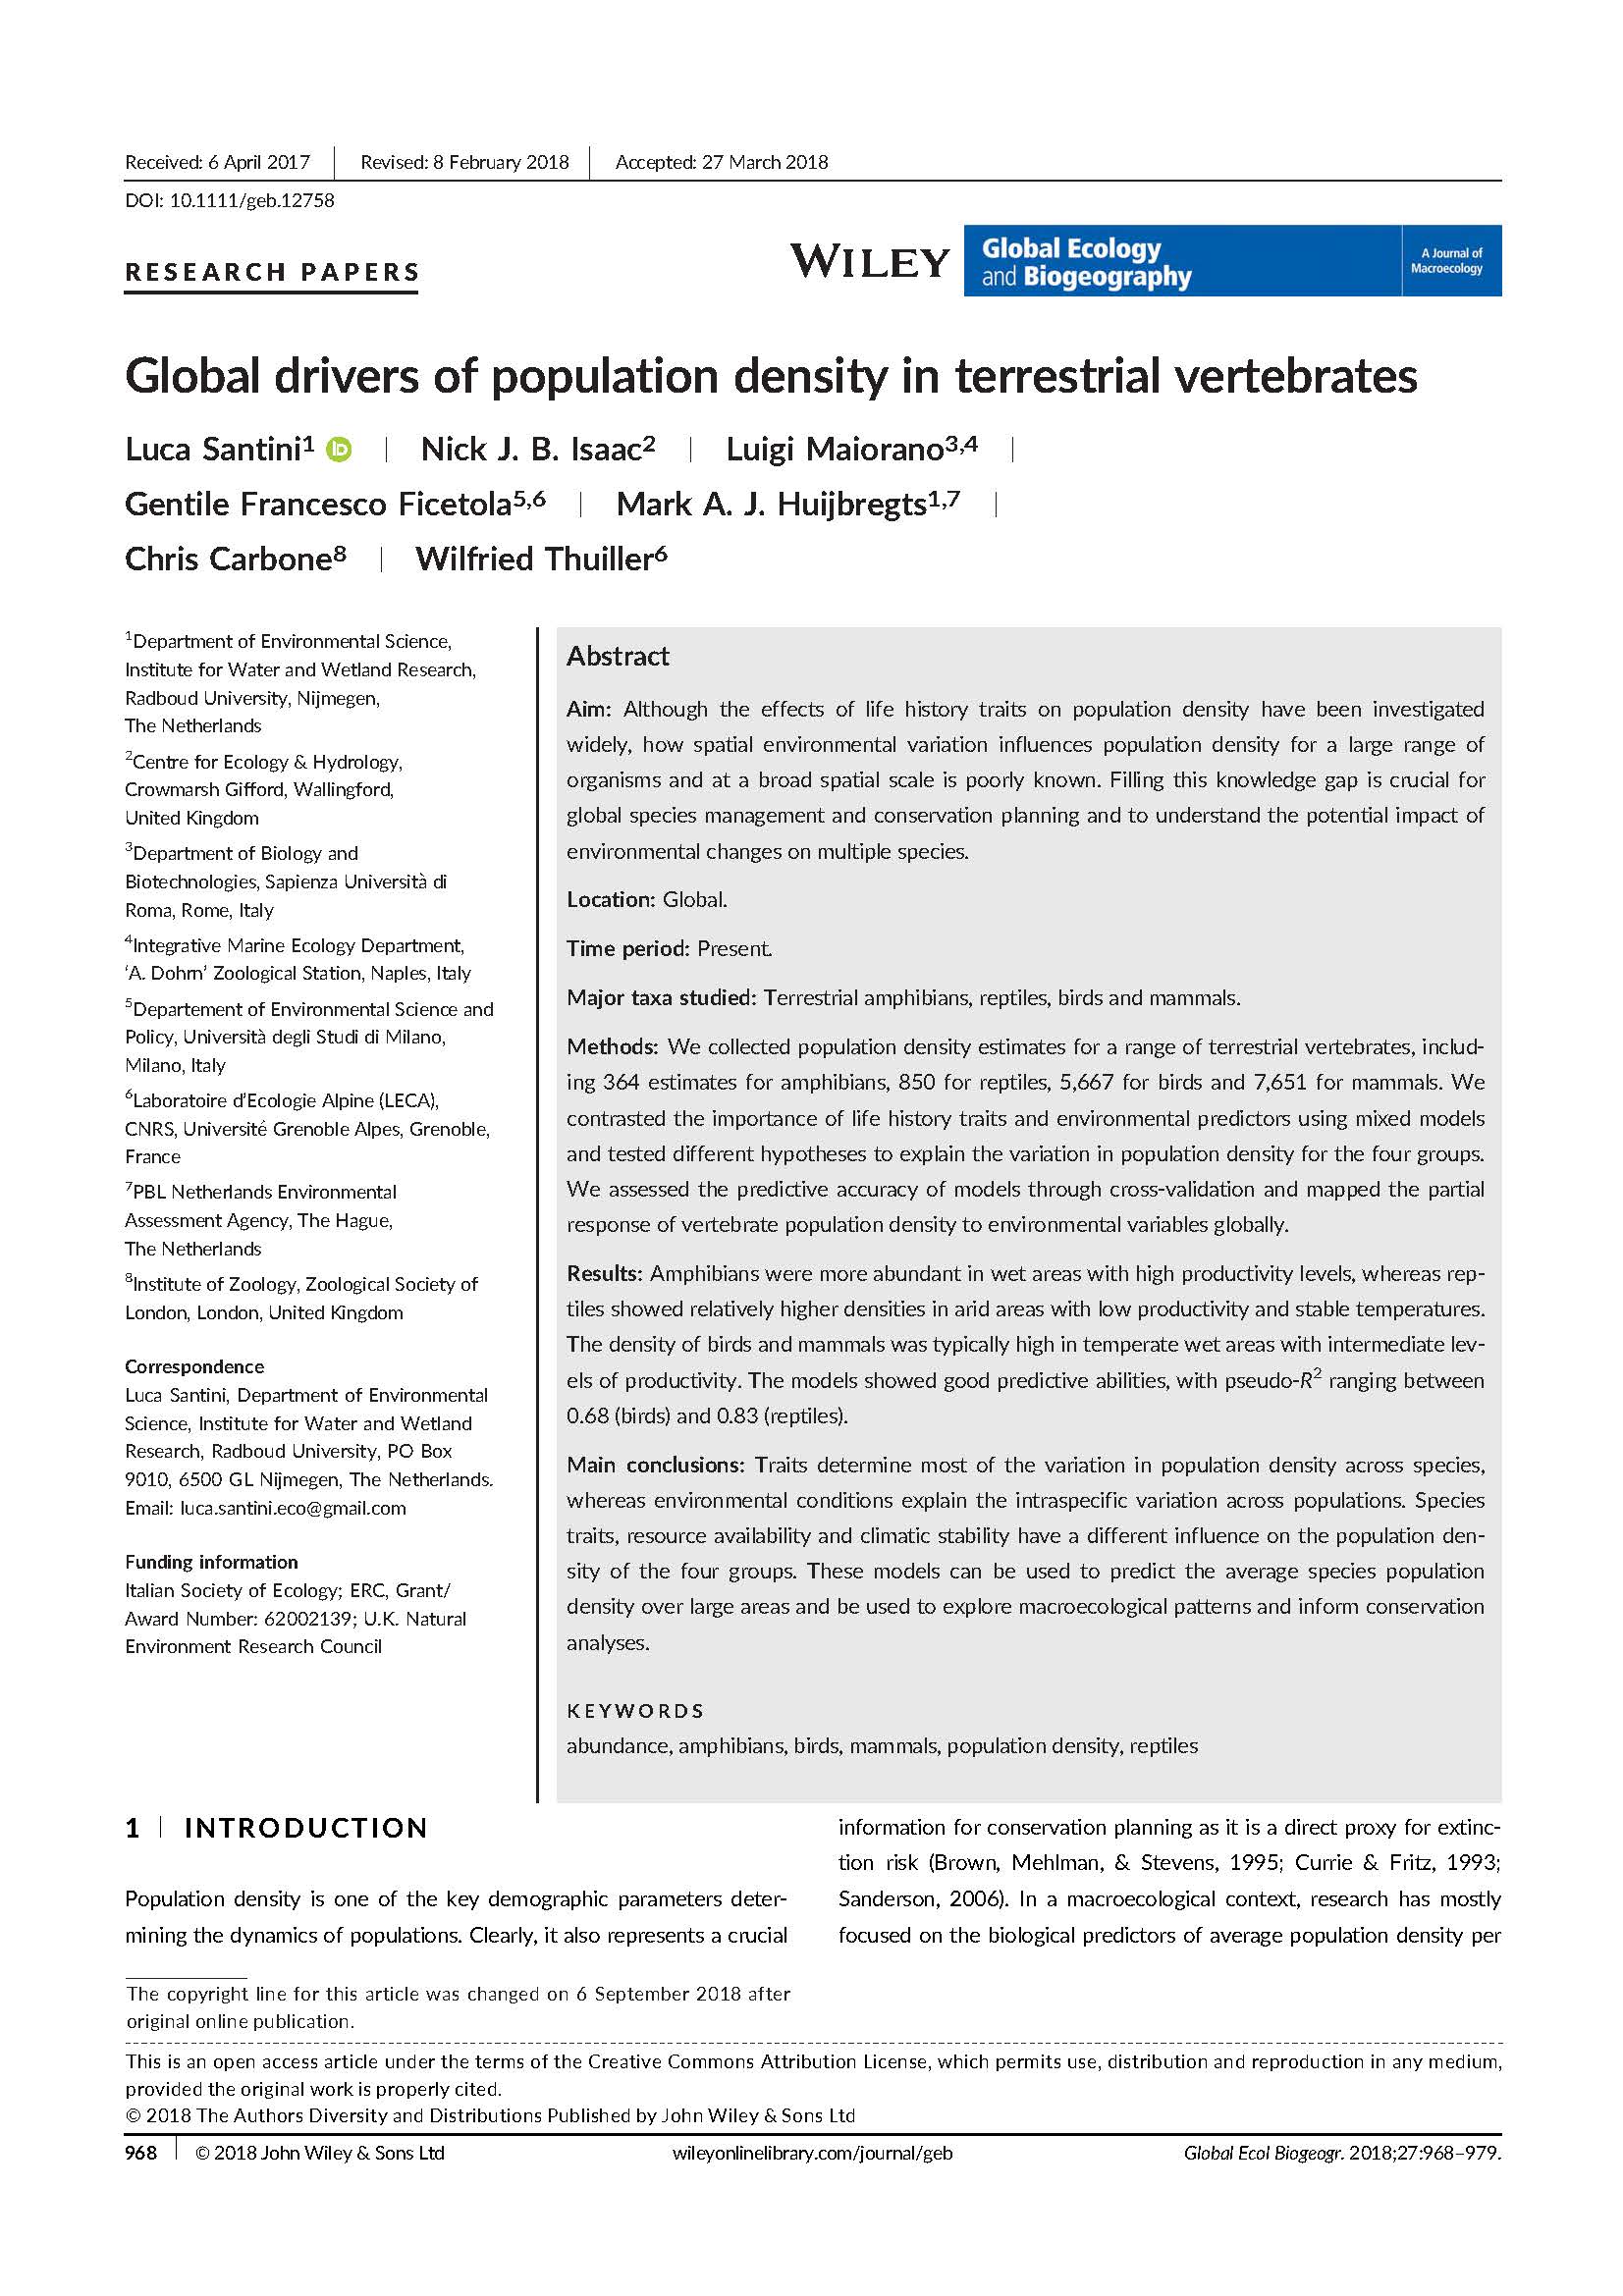 Santini et al 2018 global drivers of population density in terrestrial vertebrates